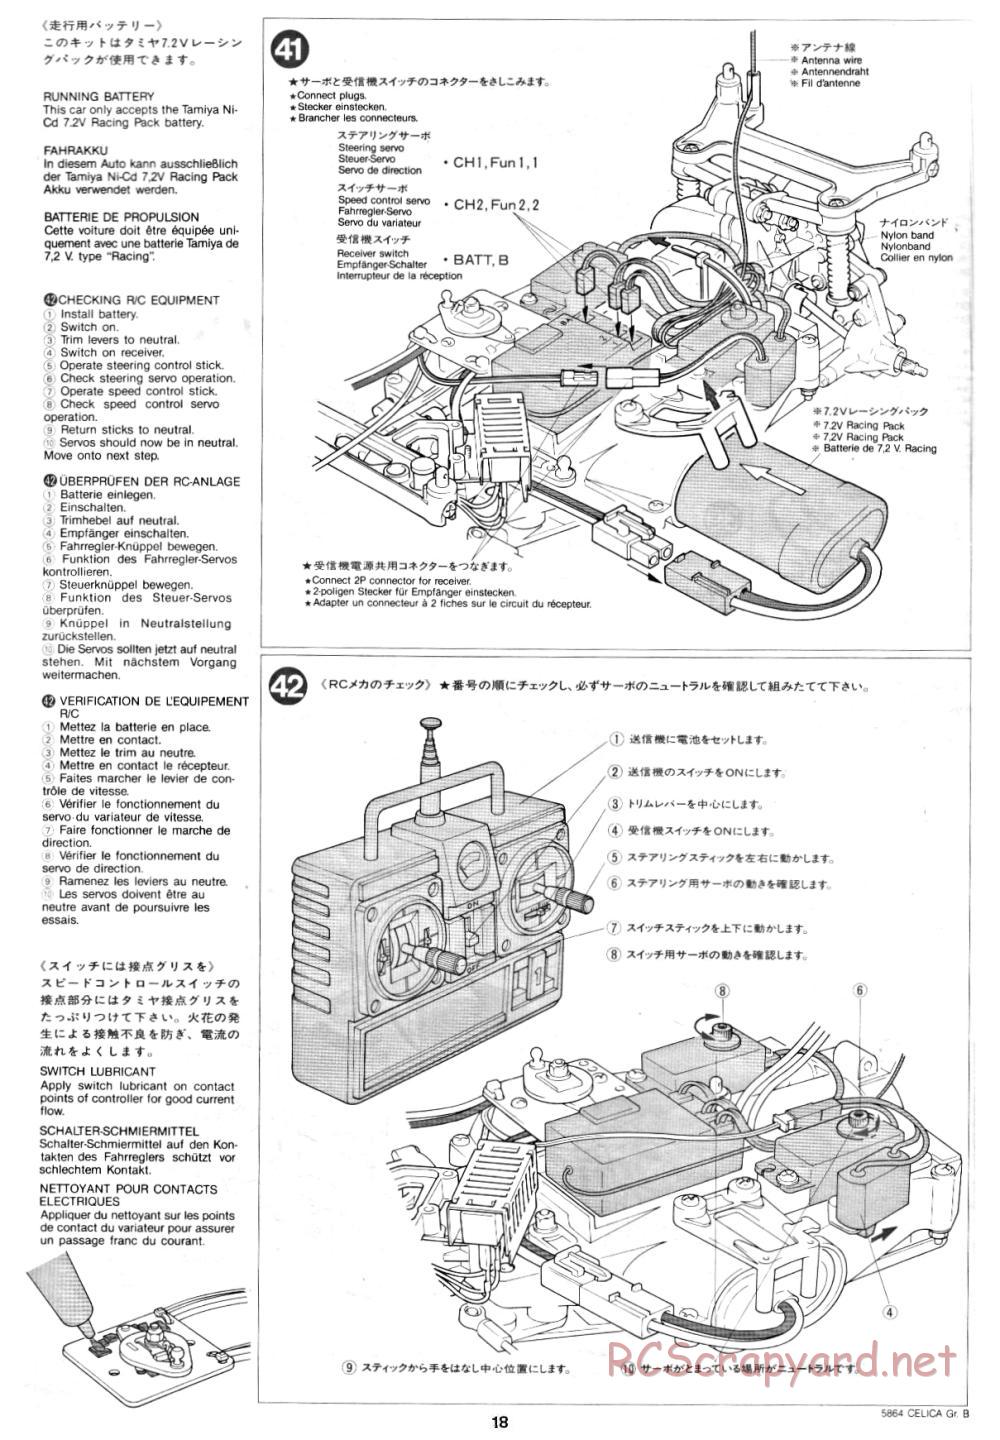 Tamiya - Toyota Celica Gr.B Rally Special - 58064 - Manual - Page 18